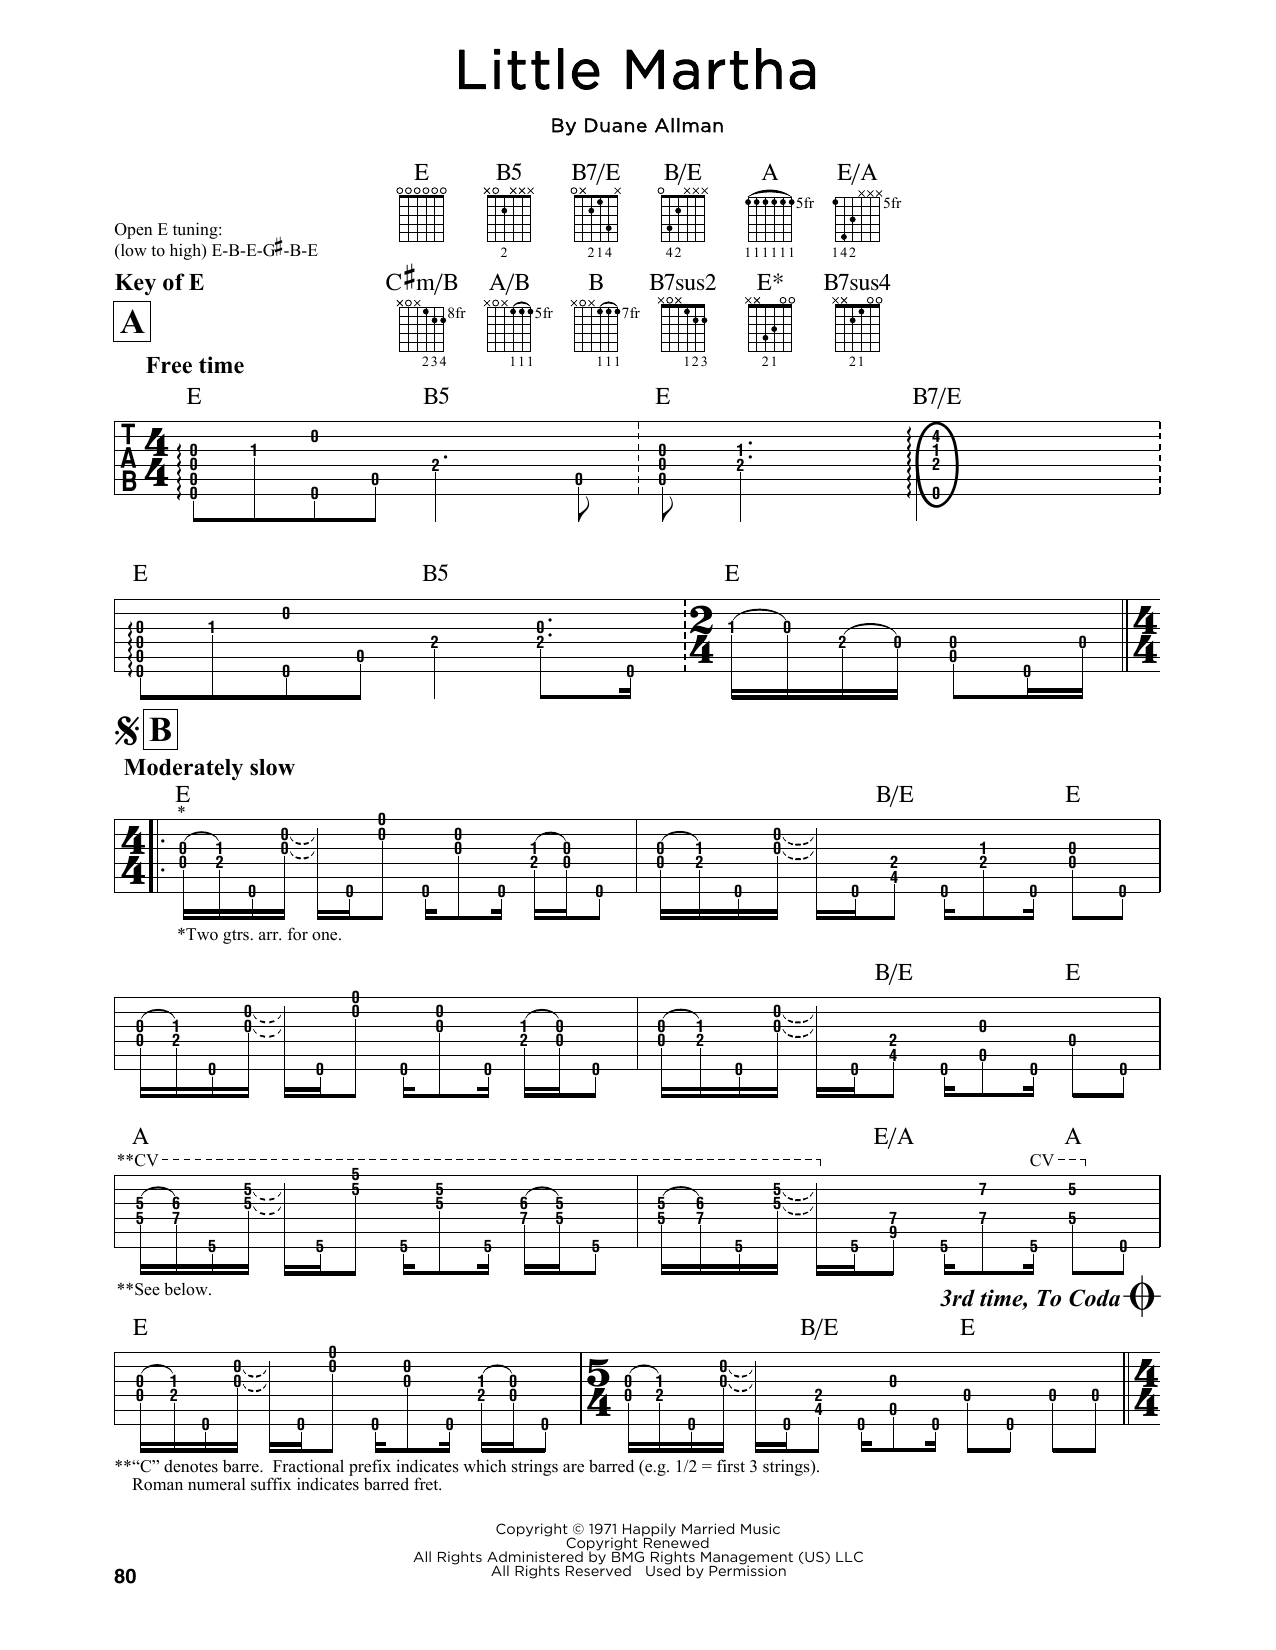 Duane Allman Little Martha Sheet Music Notes & Chords for Guitar Lead Sheet - Download or Print PDF